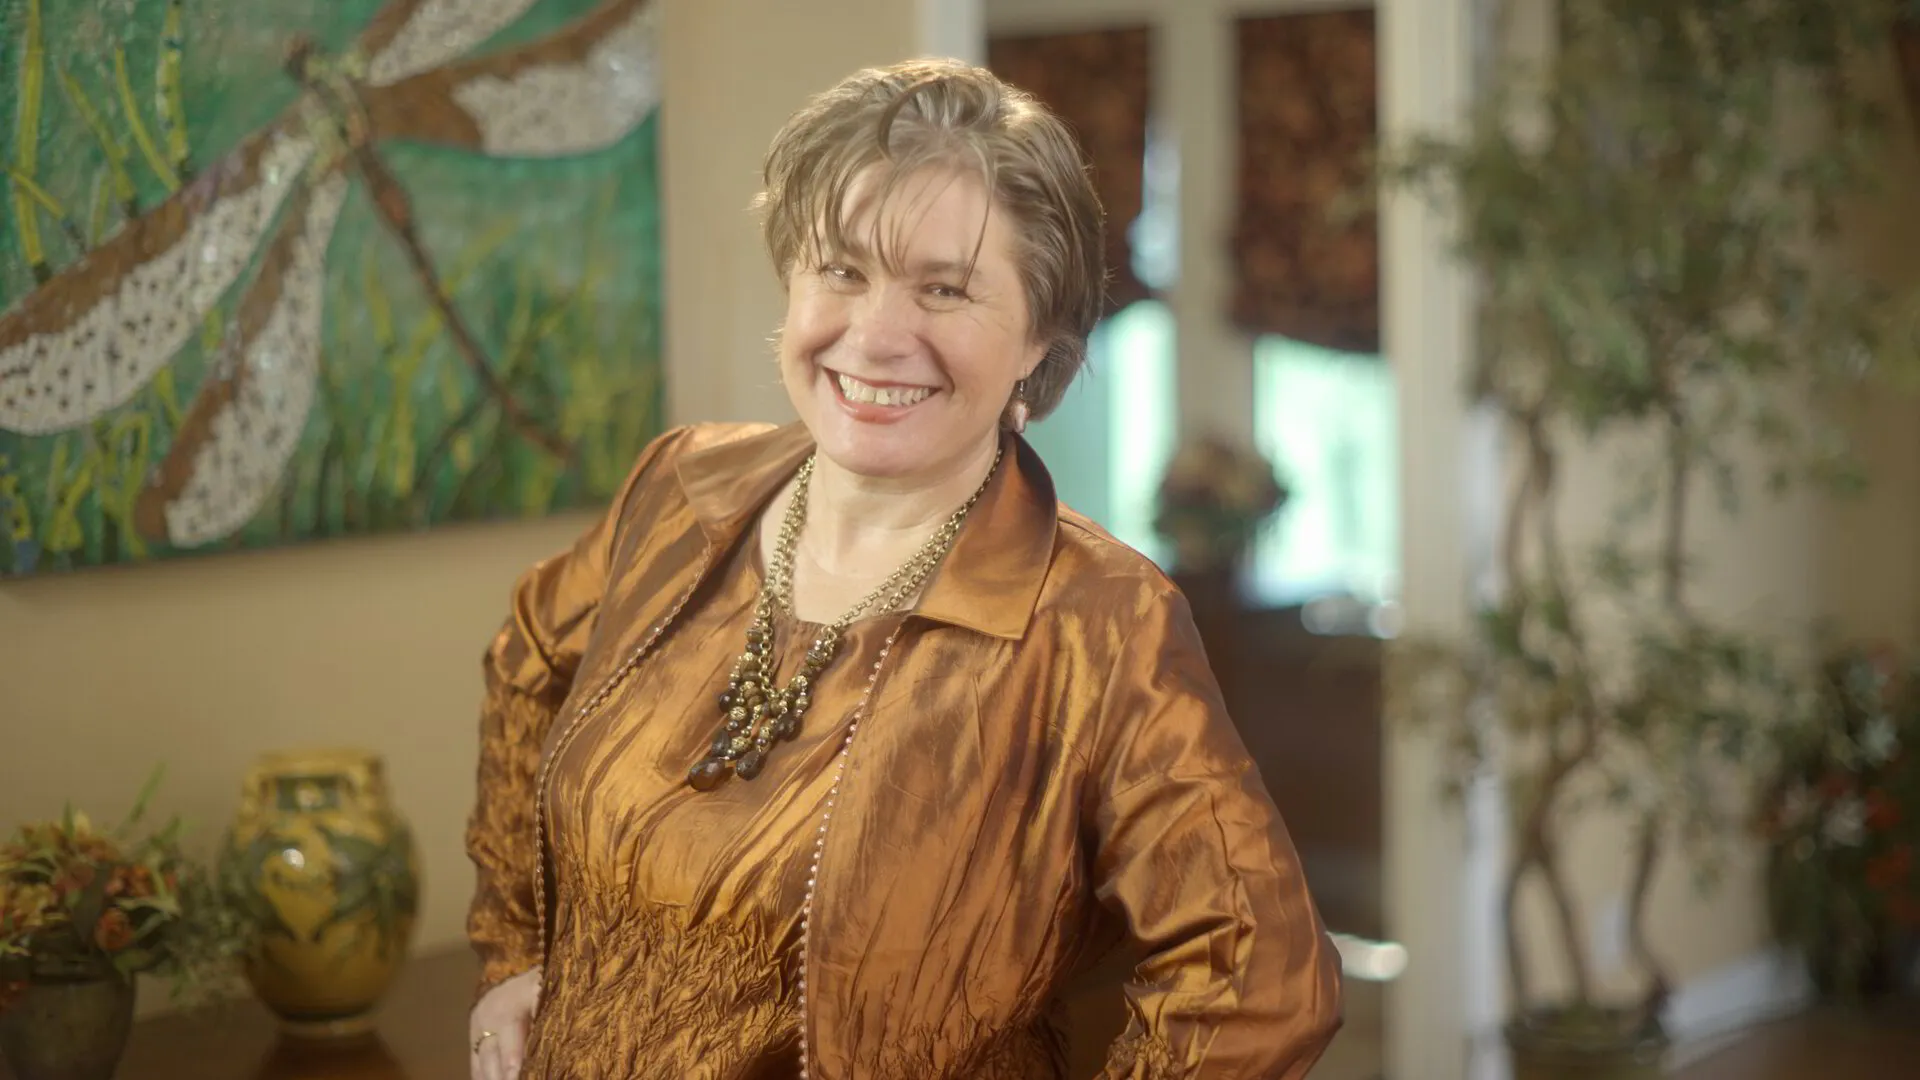 Jeanette Chasworth, The Color Whisperer Intuitive Interior Designer